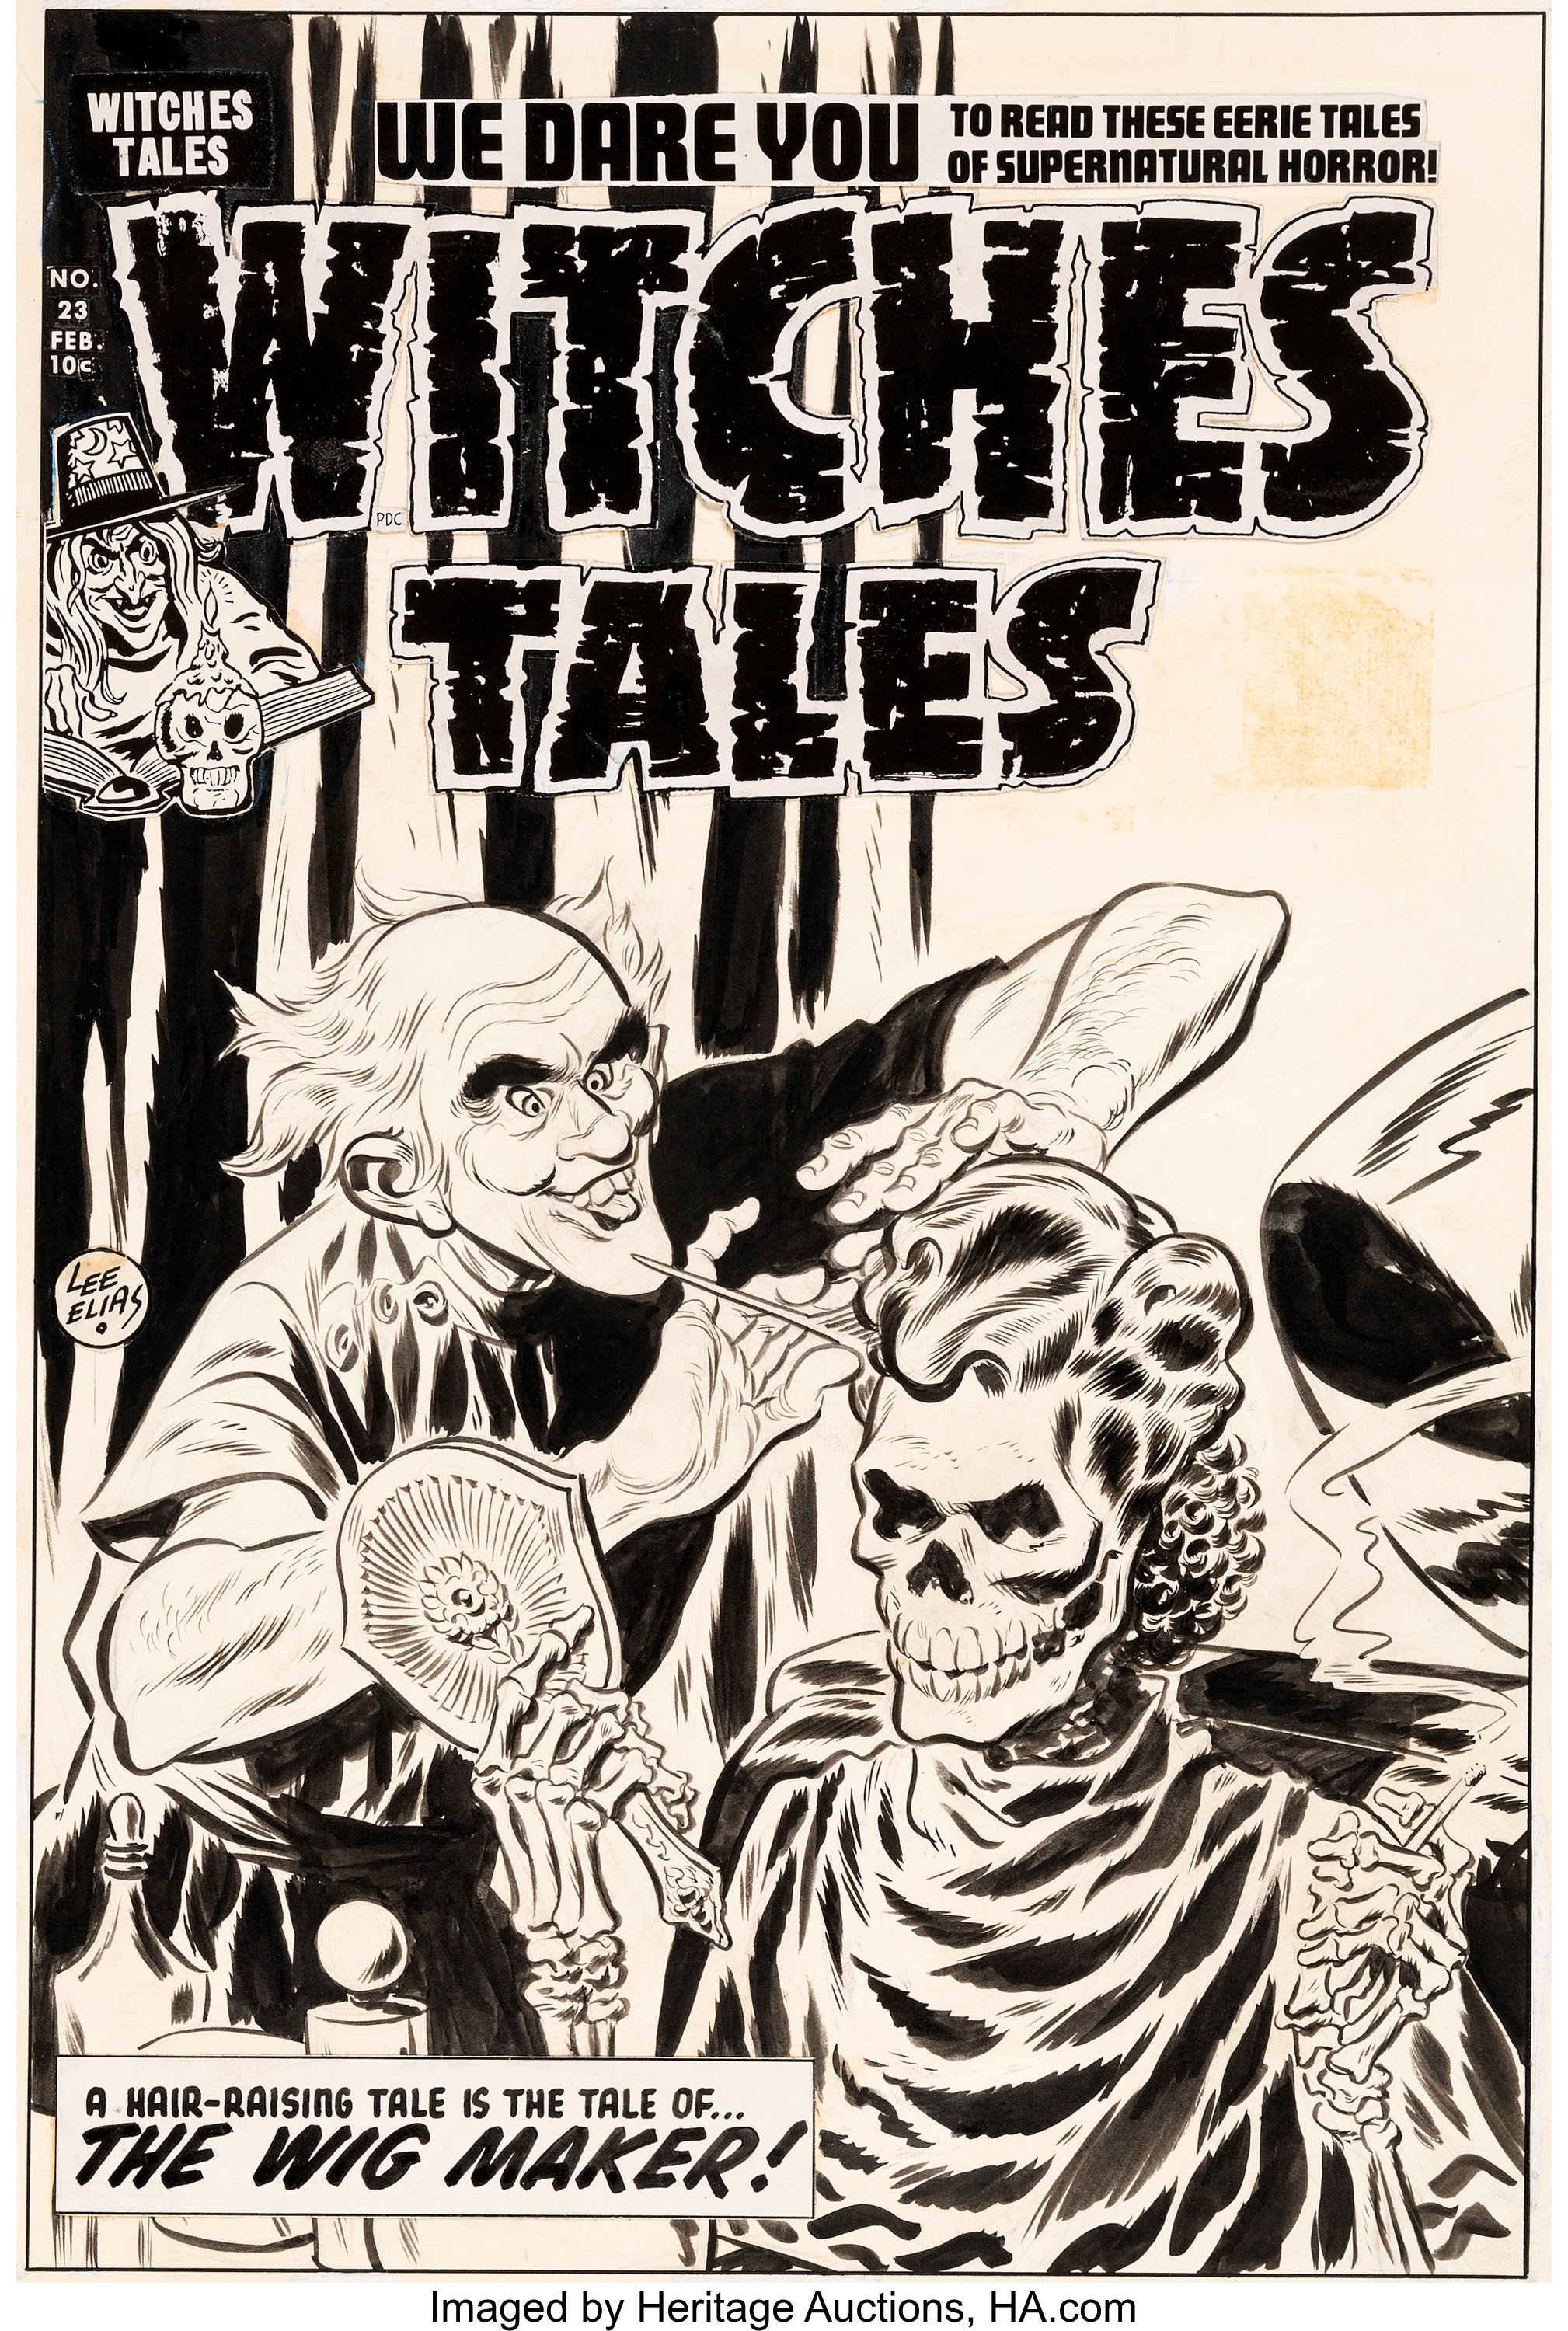 Lee Elias Witches Tales #23 Cover Original Art (Harvey Comics, | Lot #94067  | Heritage Auctions